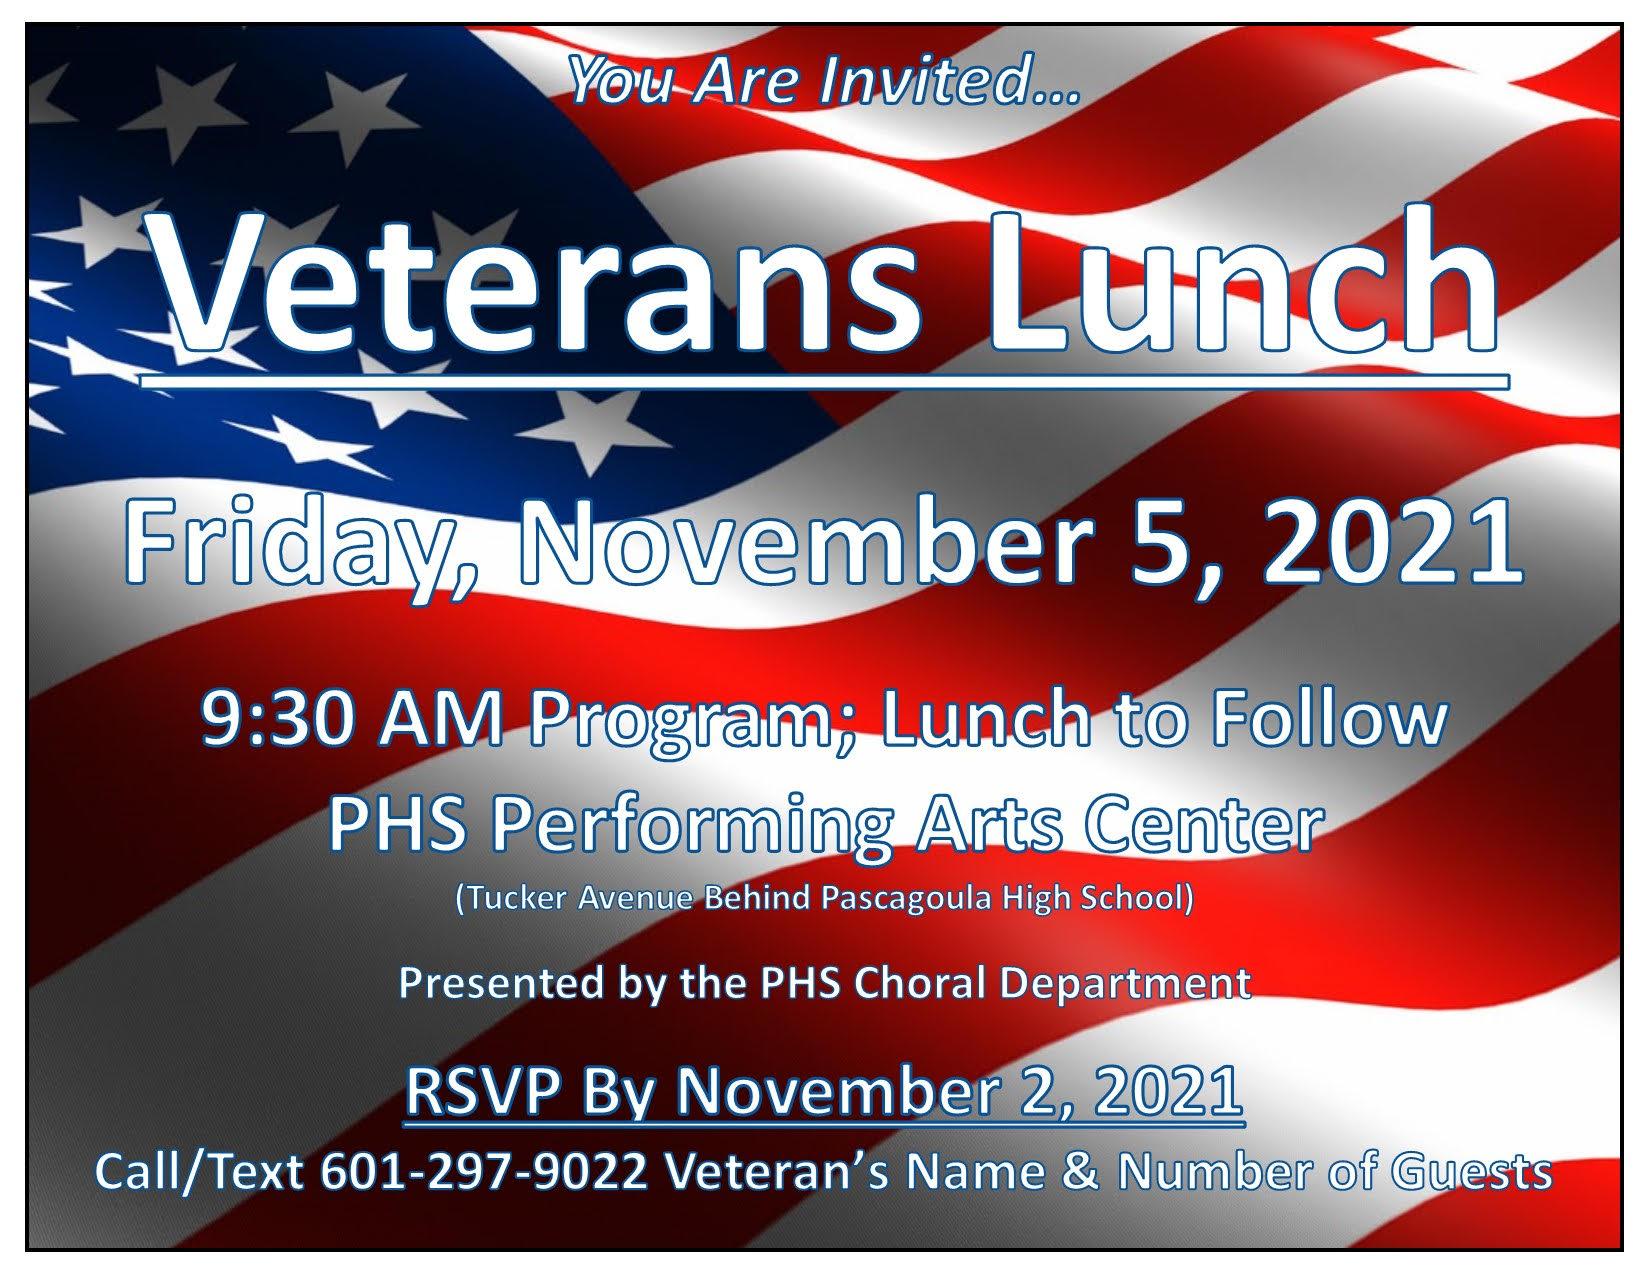 Veterans Lunch announcement